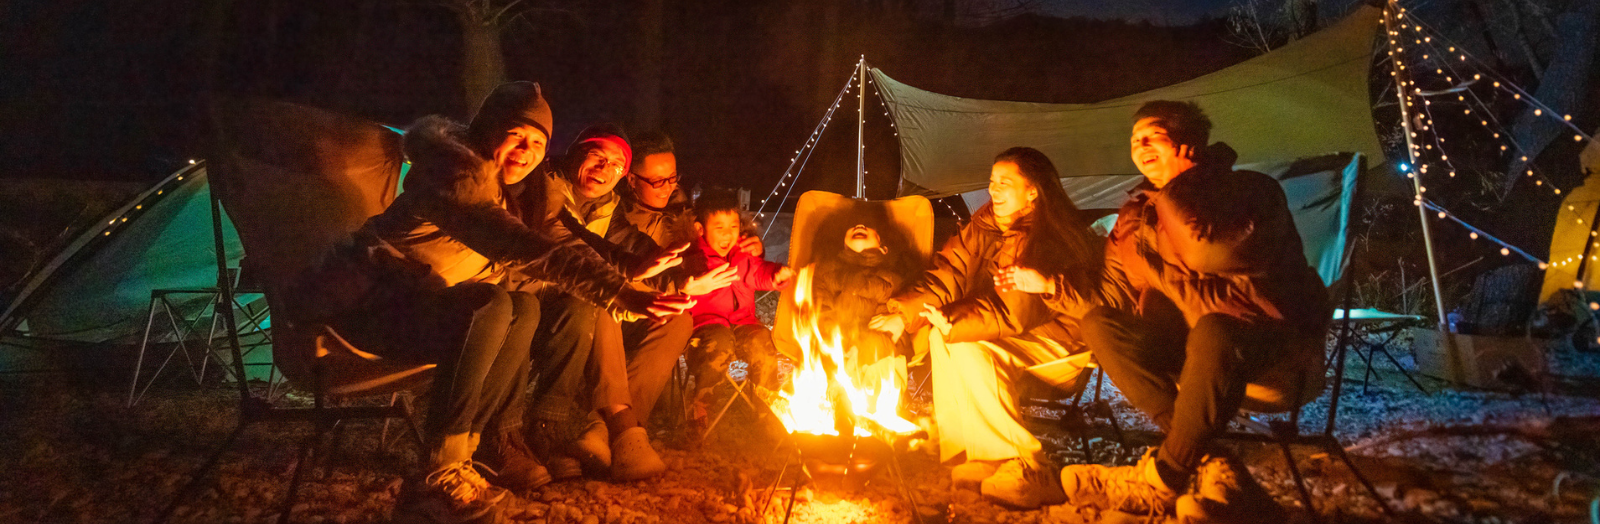 Outdoor campfire at night